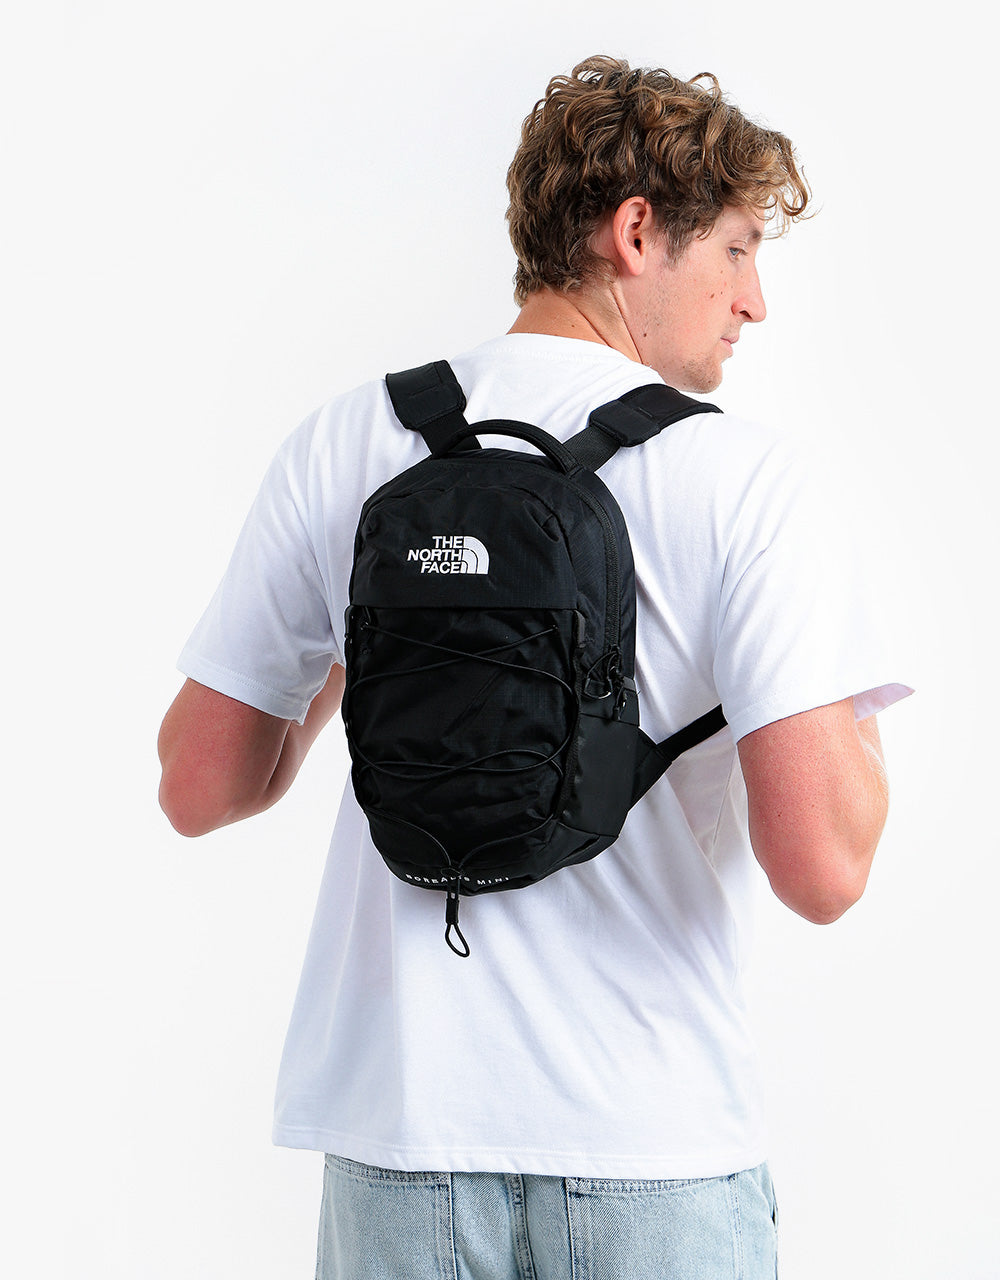 The North Face Borealis Mini Backpack - TNF Black/TNF Black